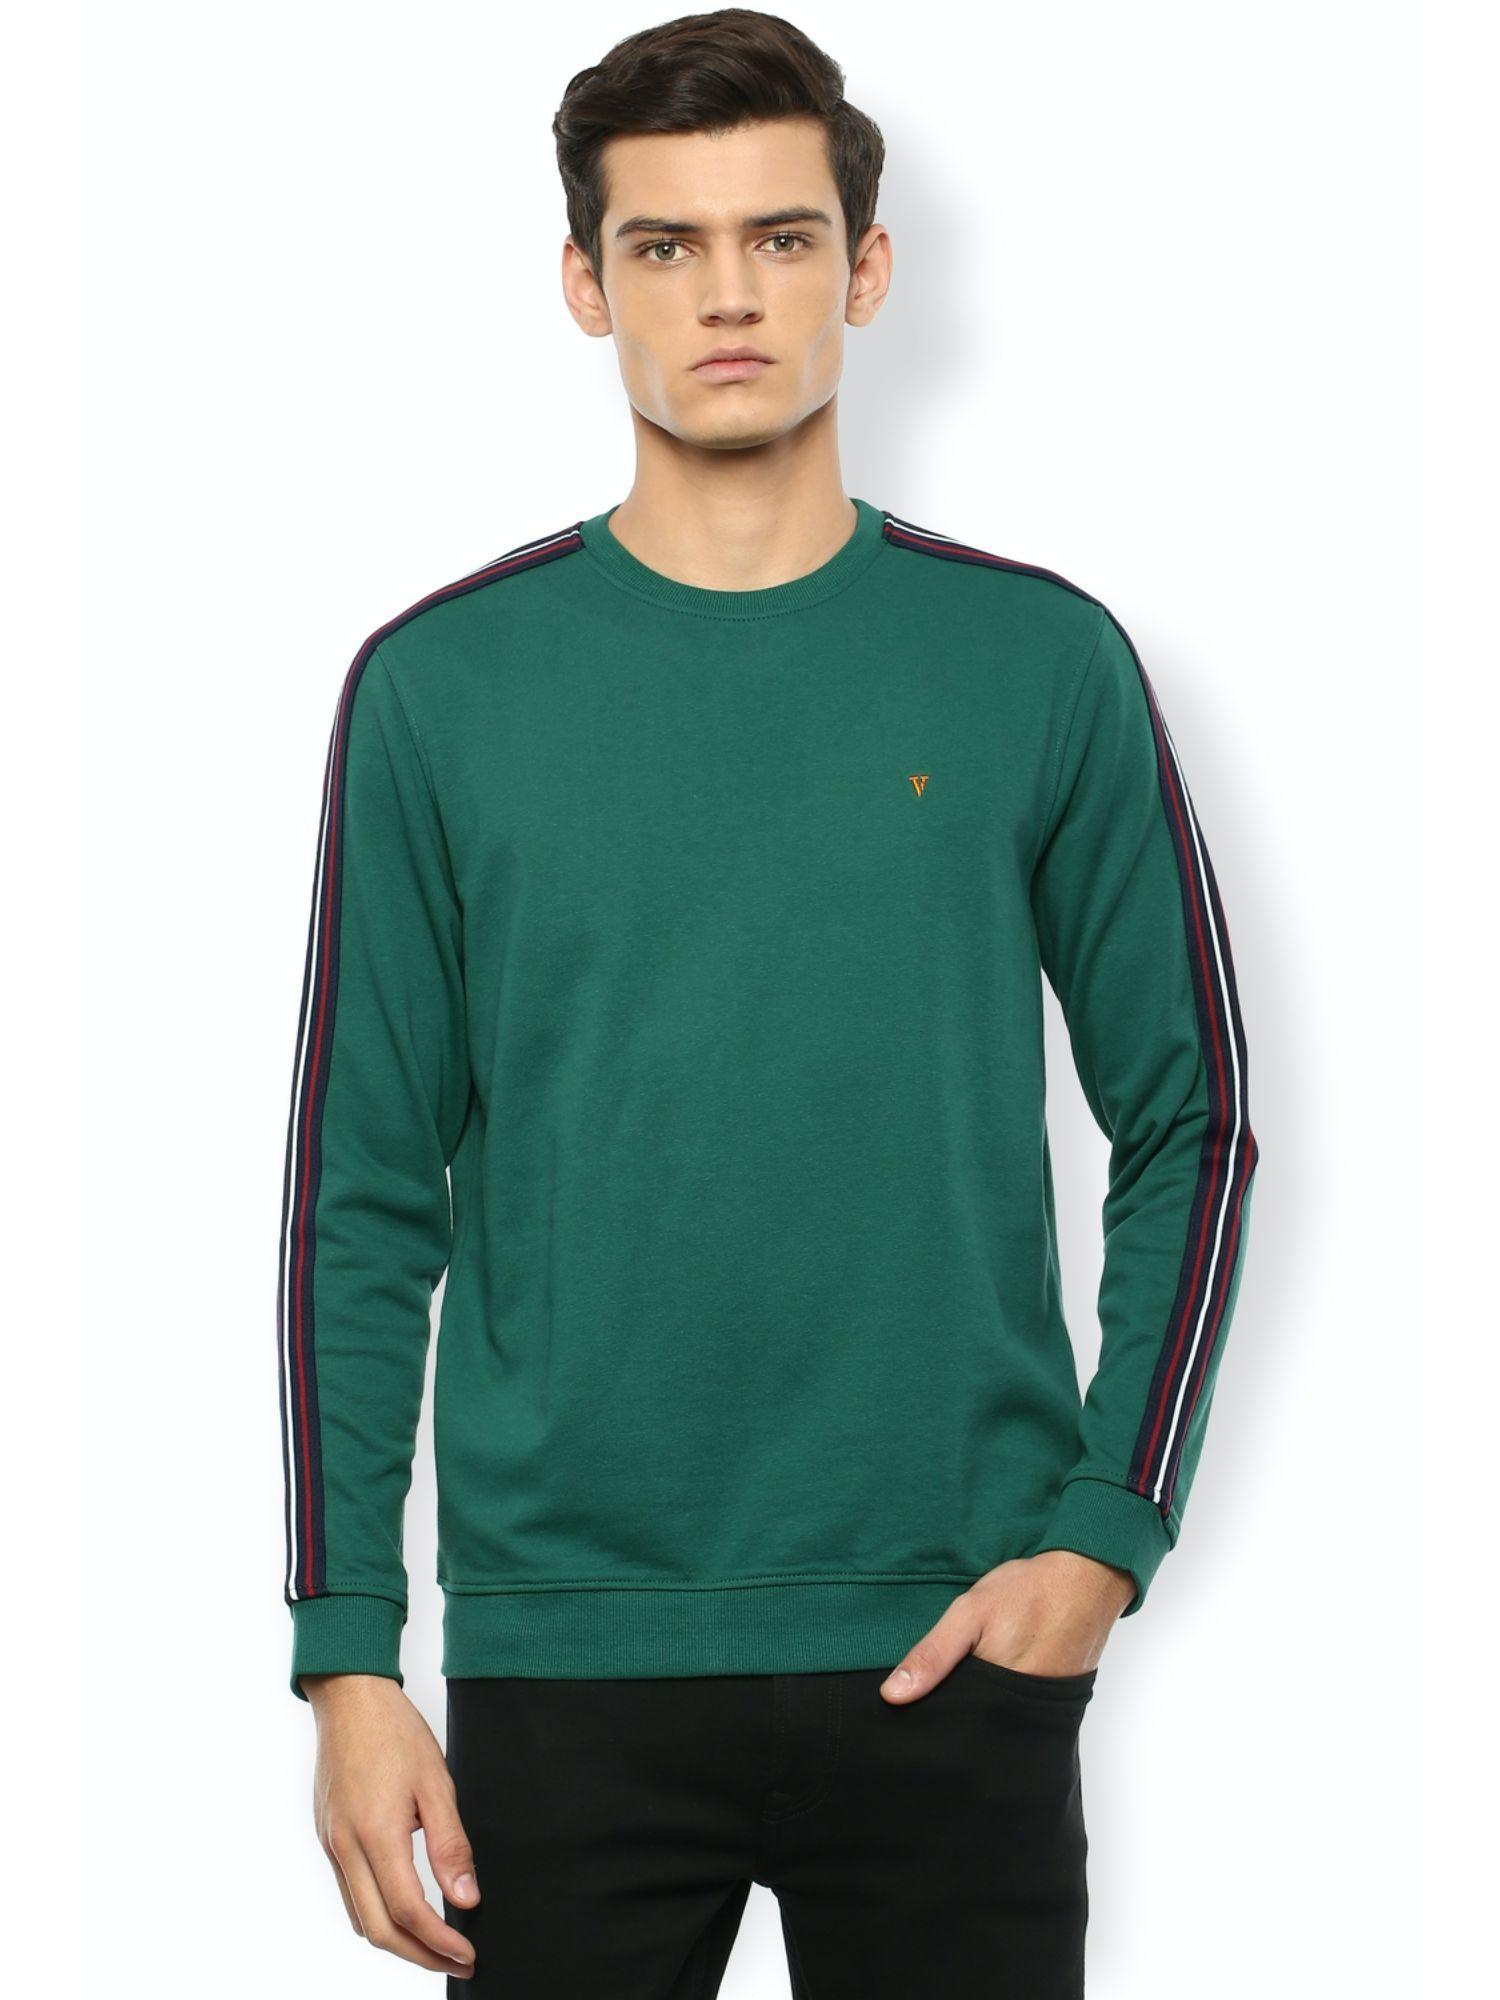 mens solid green sweatshirt